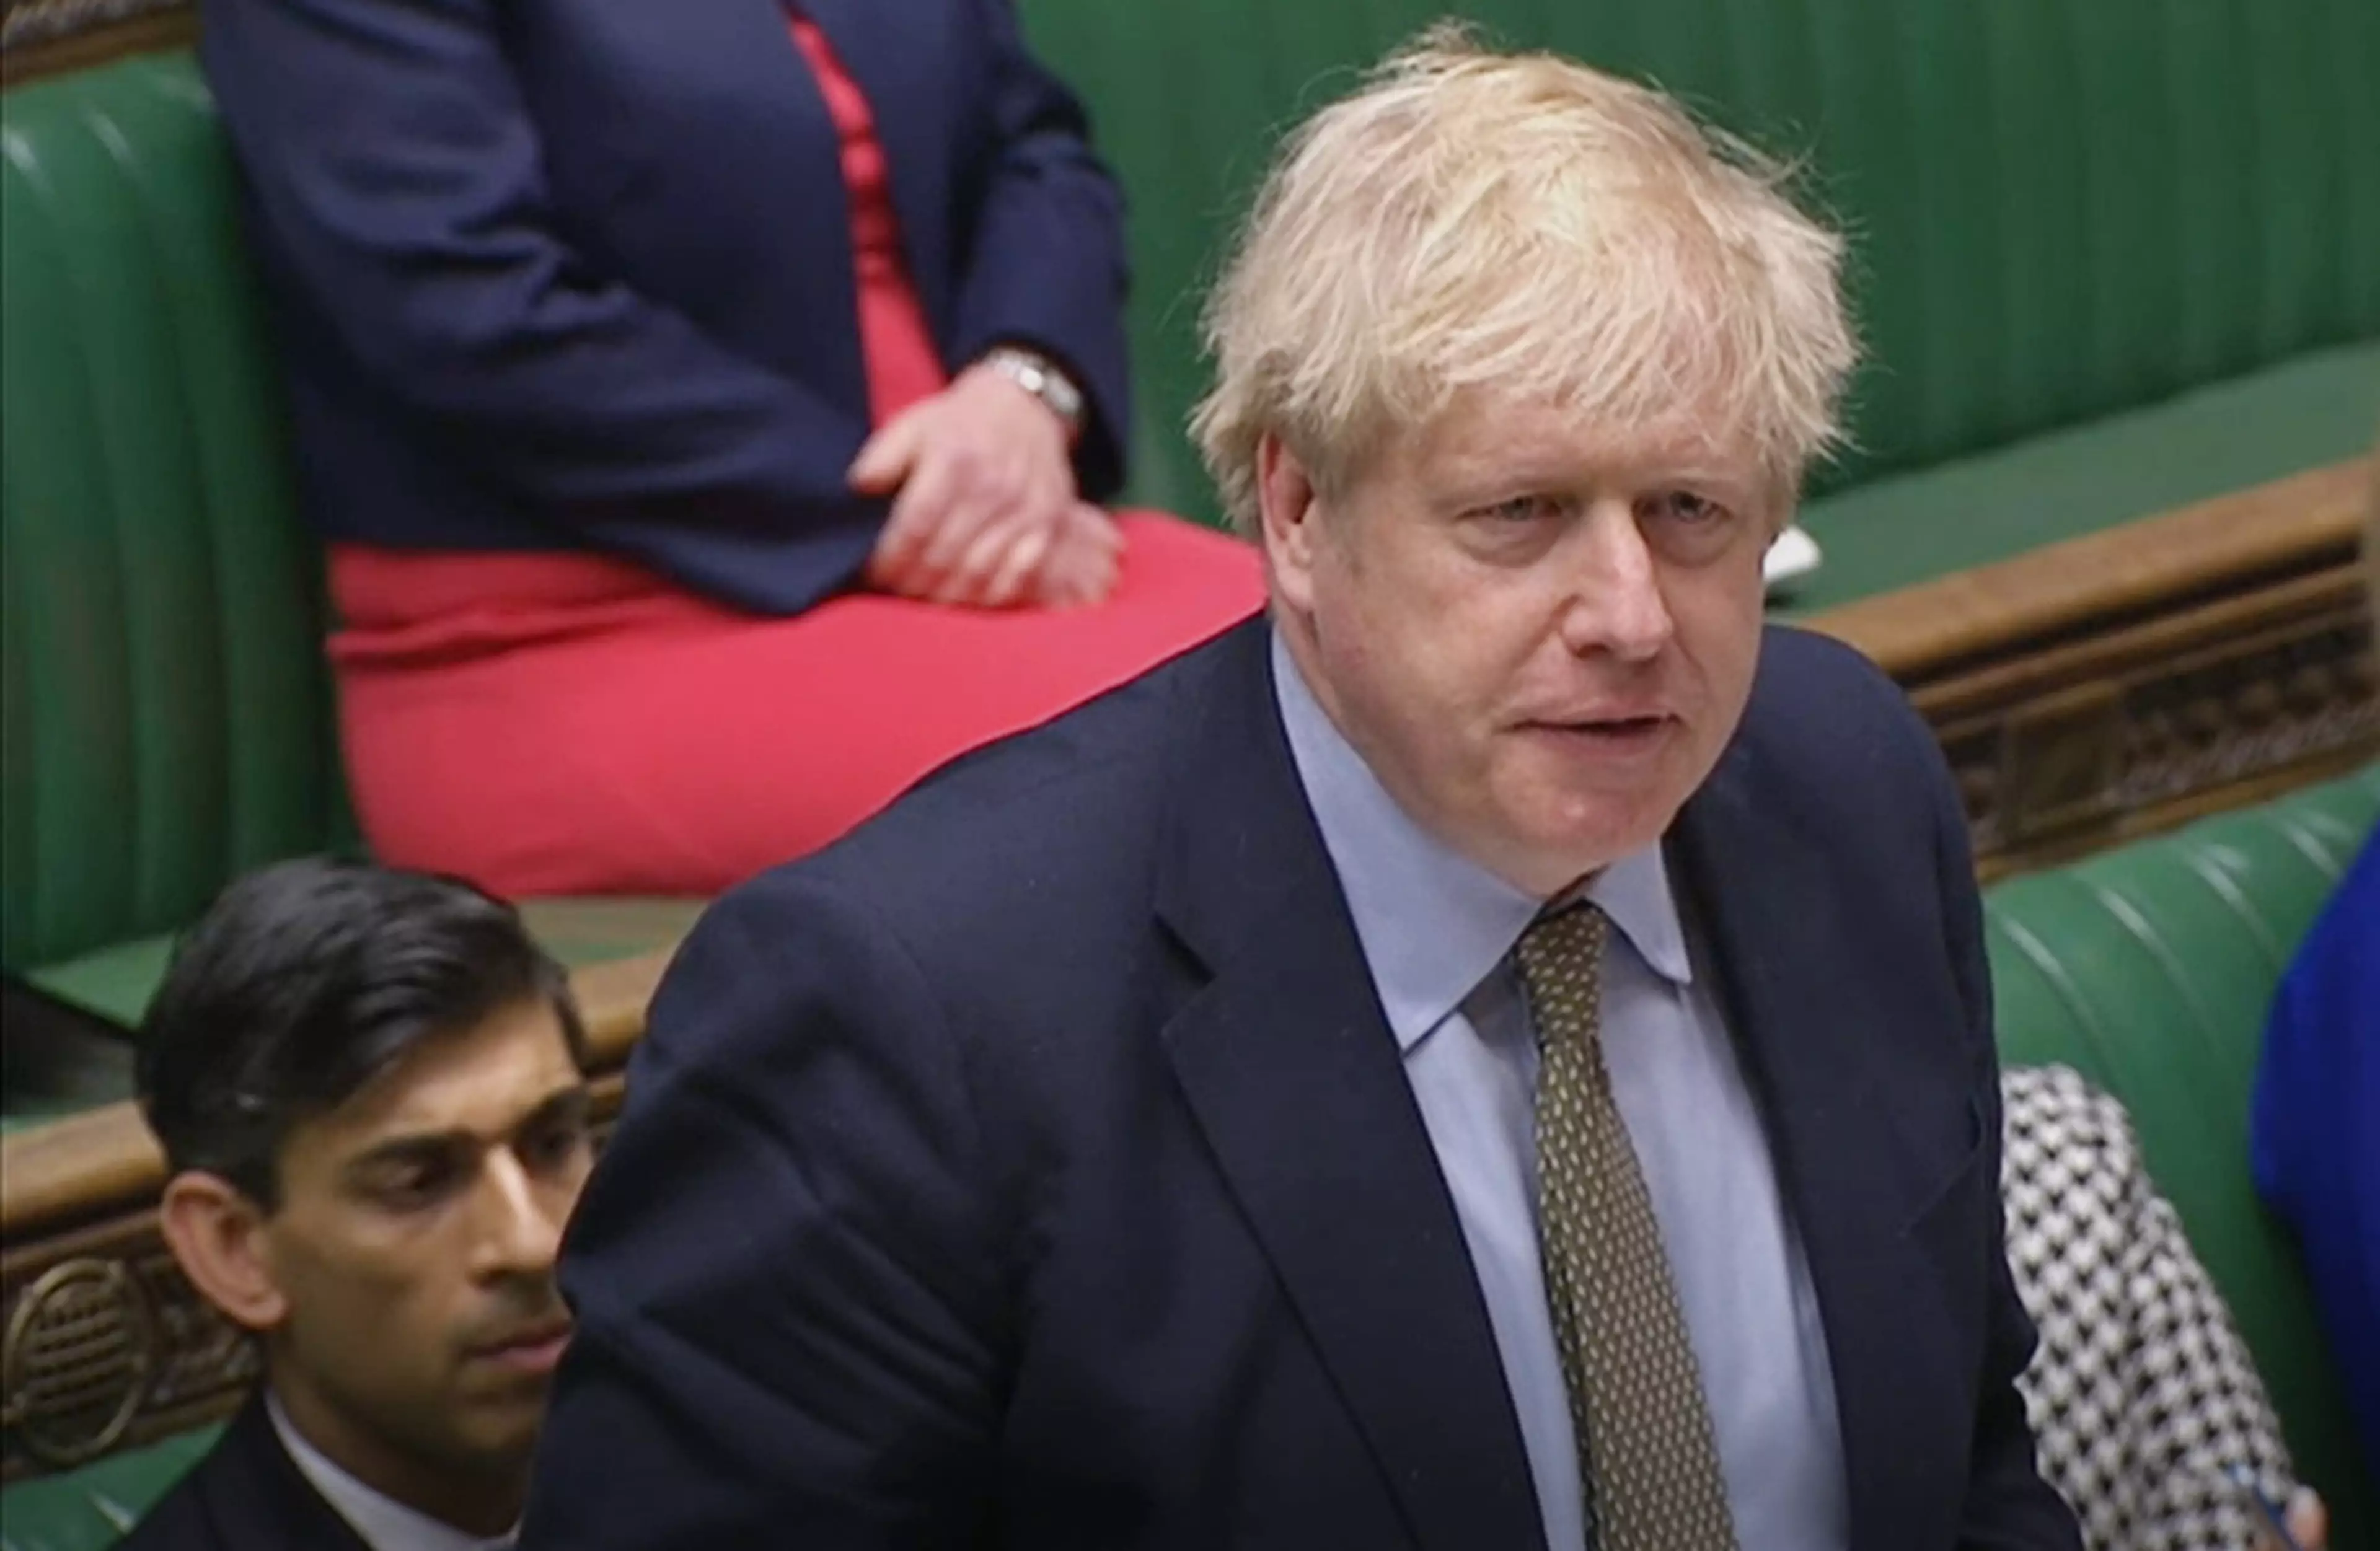 PM Boris Johnson has also tested positive for Covid-19.